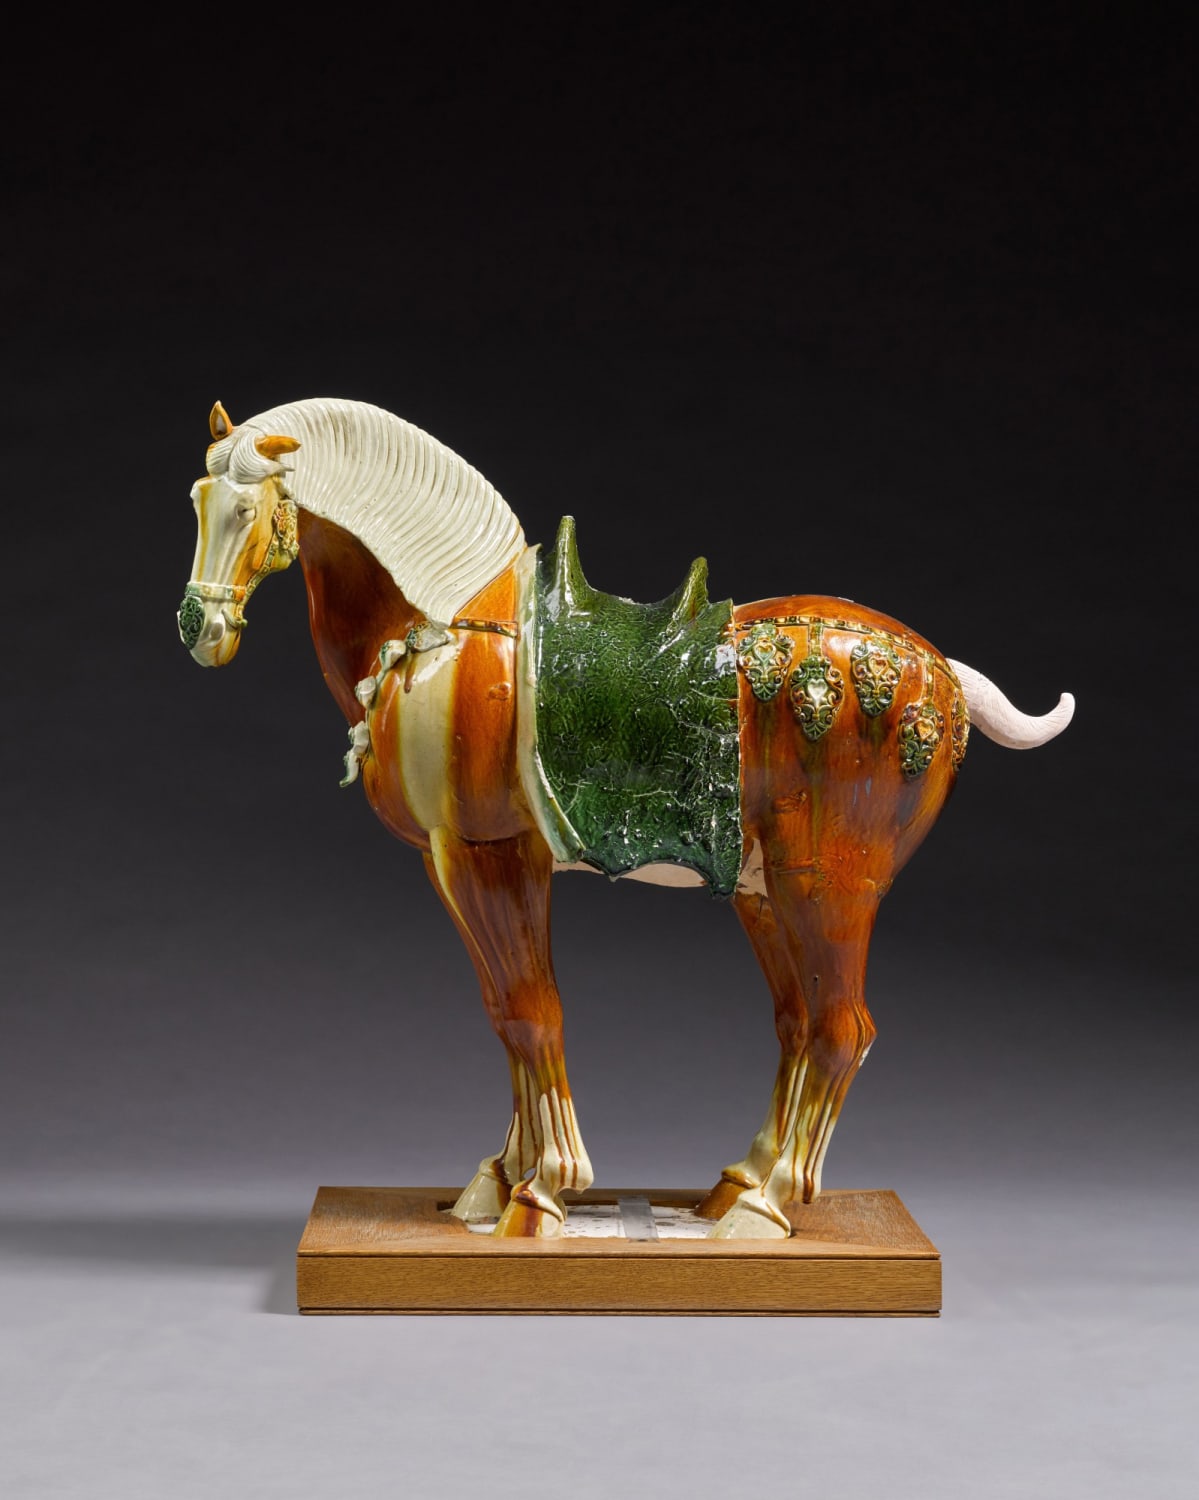 Ceramic figure of a caparisoned Ferghana horse with sancai glaze and textured saddlecloth. China, Tang Dynasty (618-907 CE).